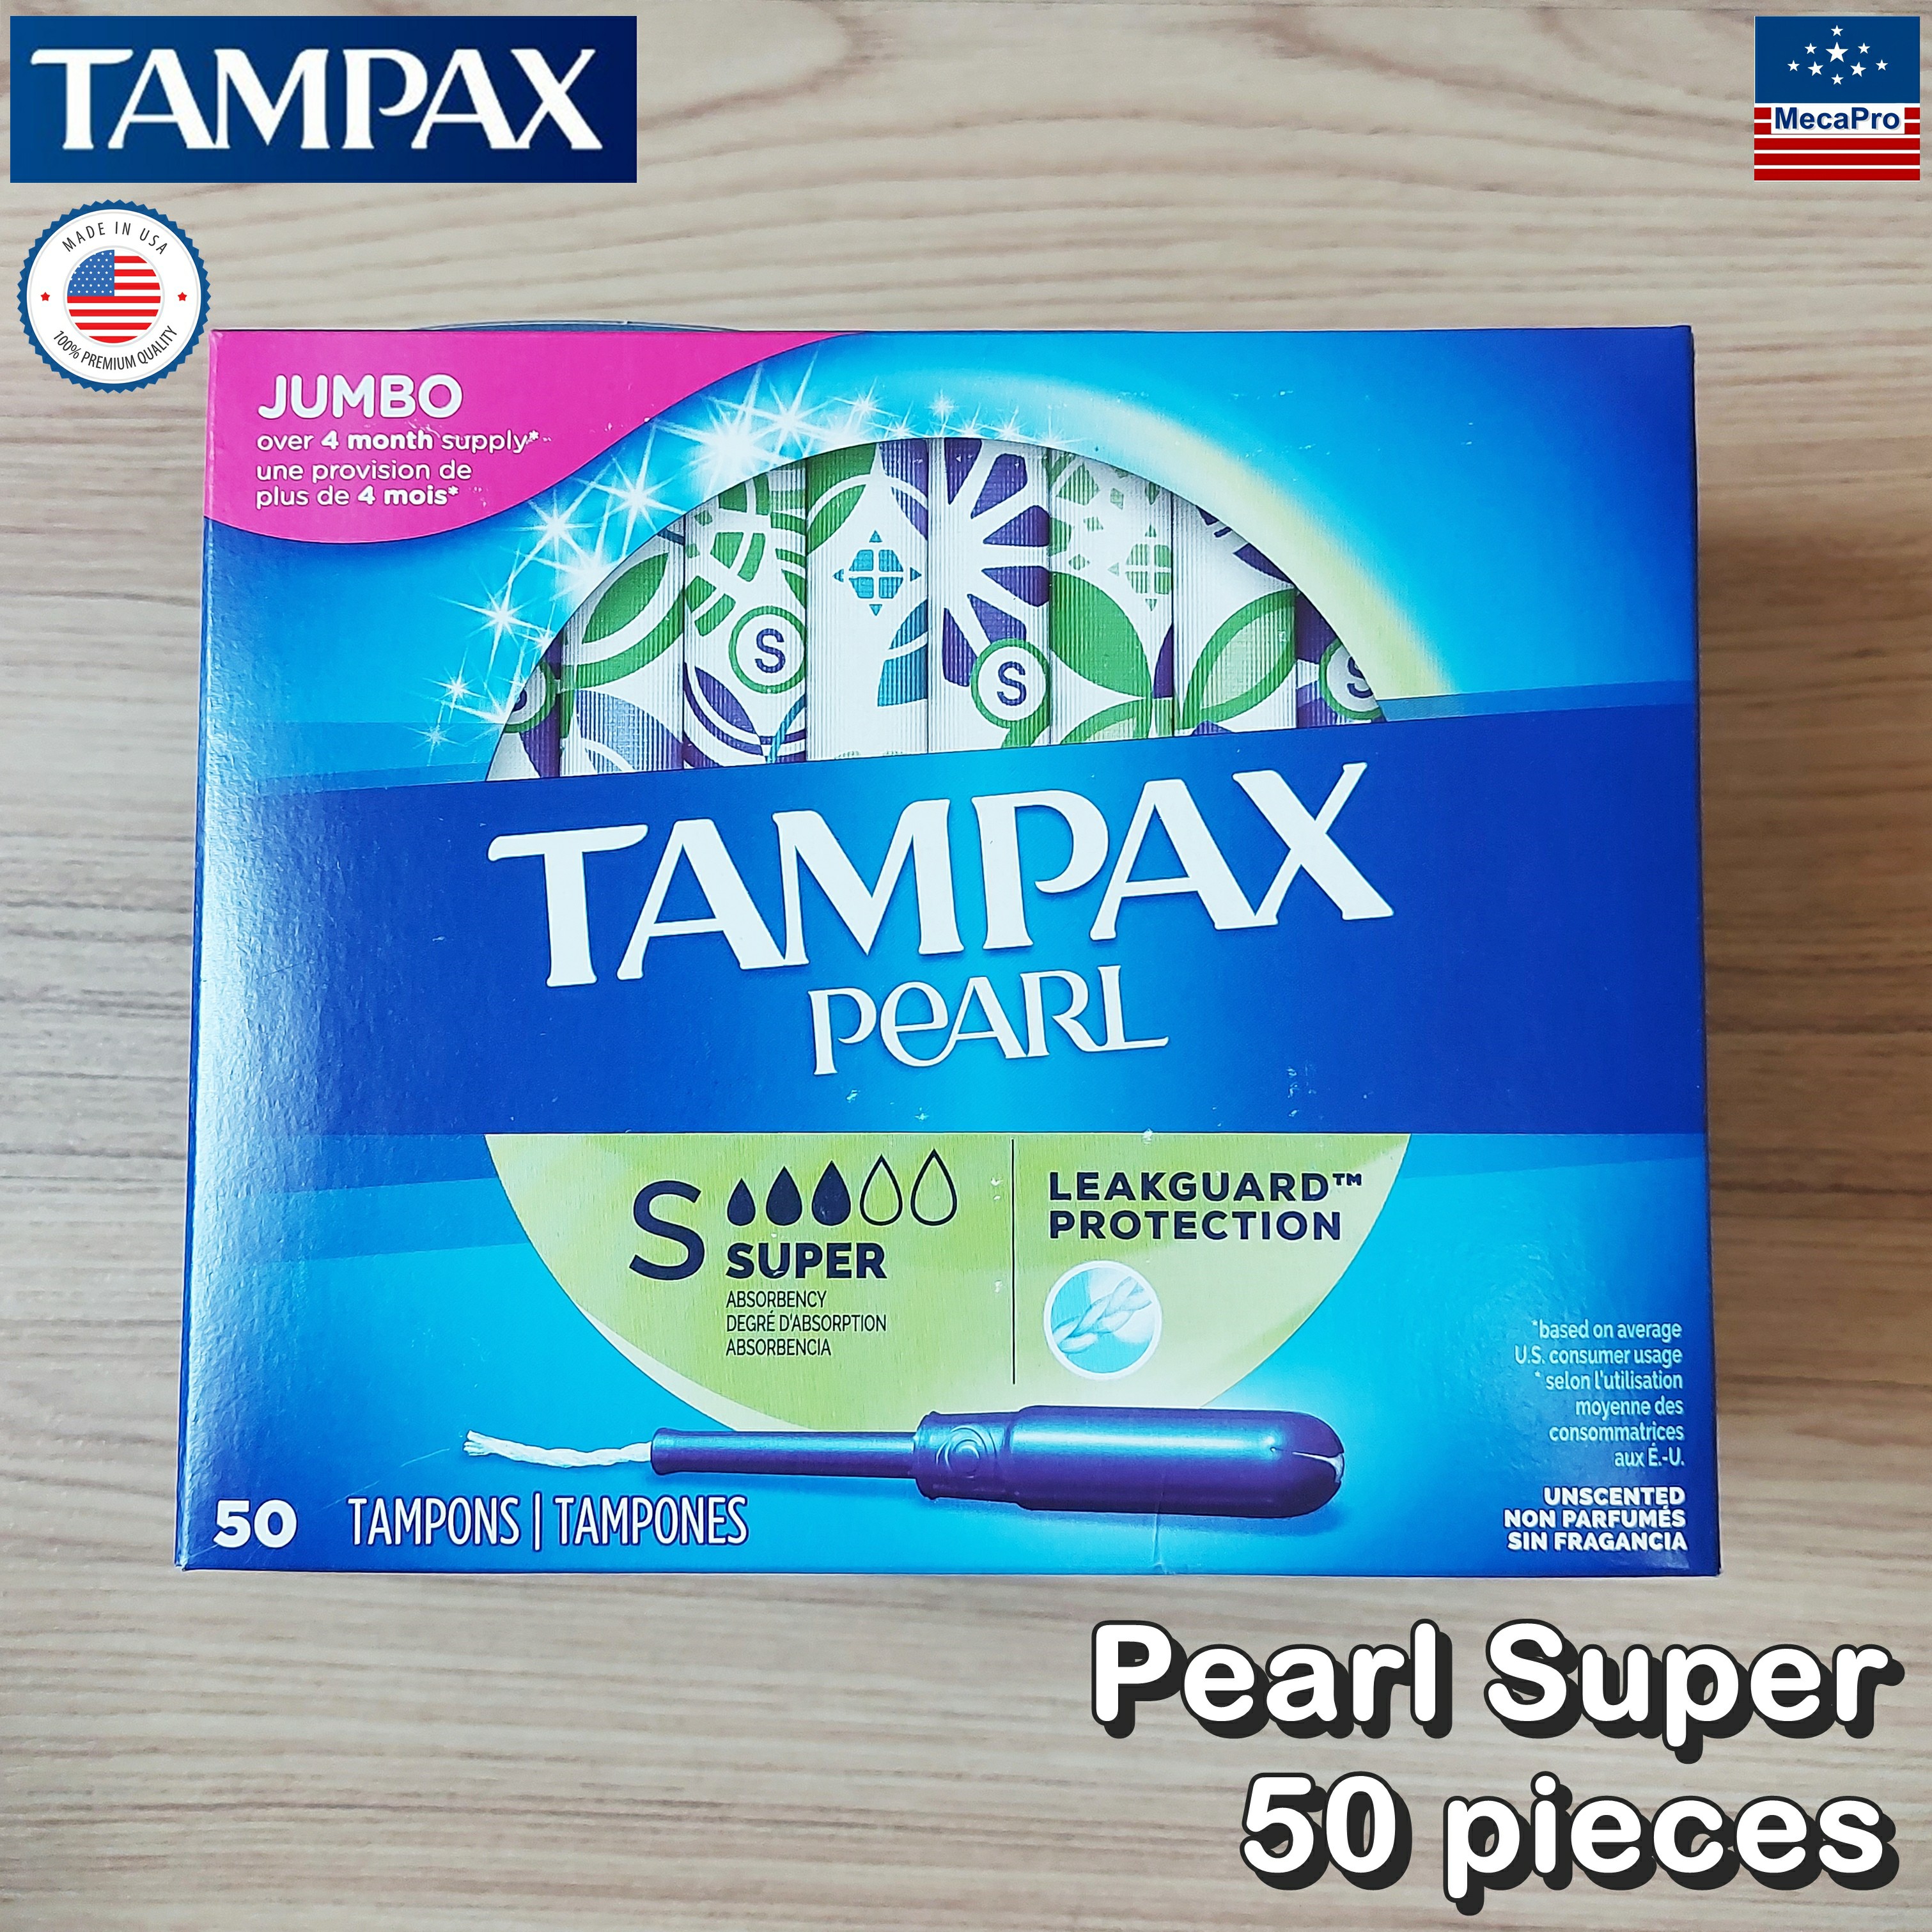 Tampax® Pearl Super Plastic Tampons 50 pieces ผ้าอนามัยแบบสอด 50 ชิ้น เหมาะกับวันมามาก